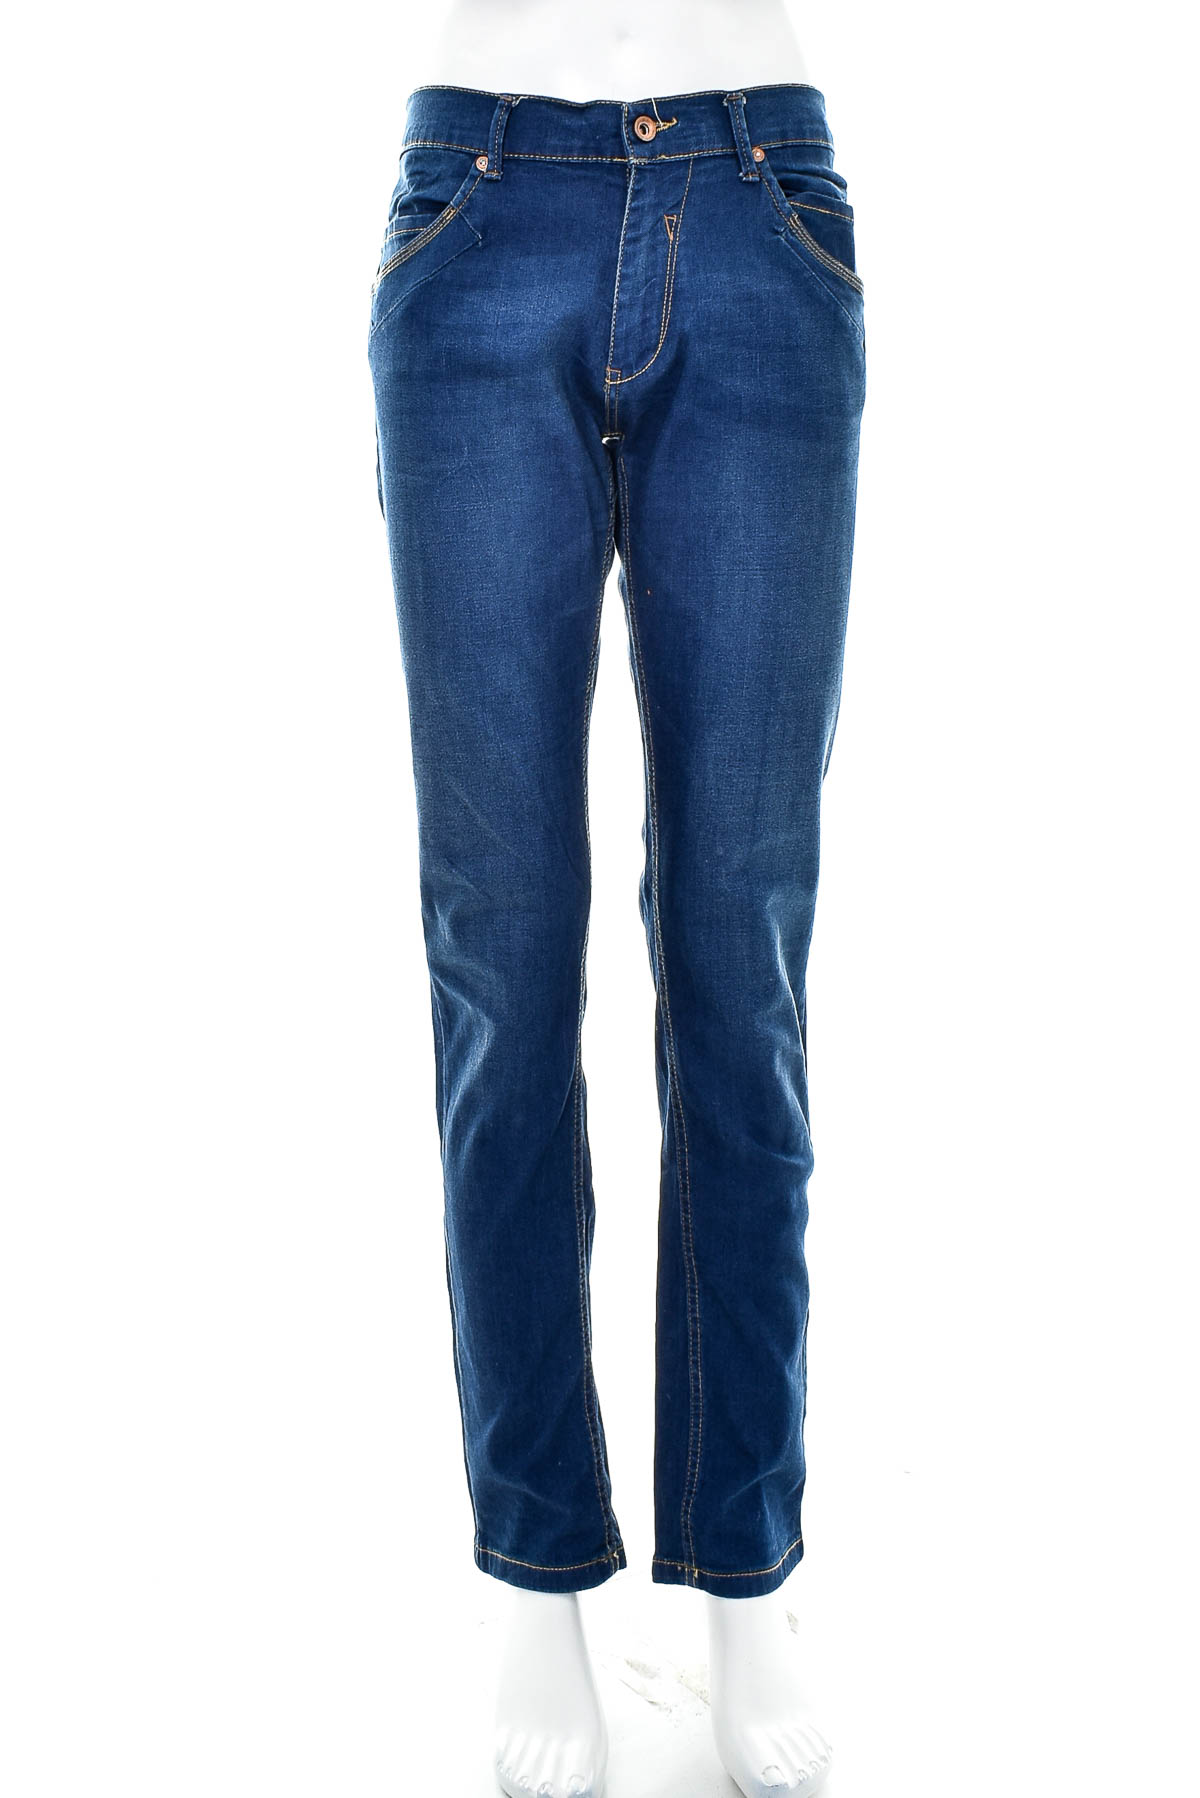 Men's jeans - ZARA Jeans - 0